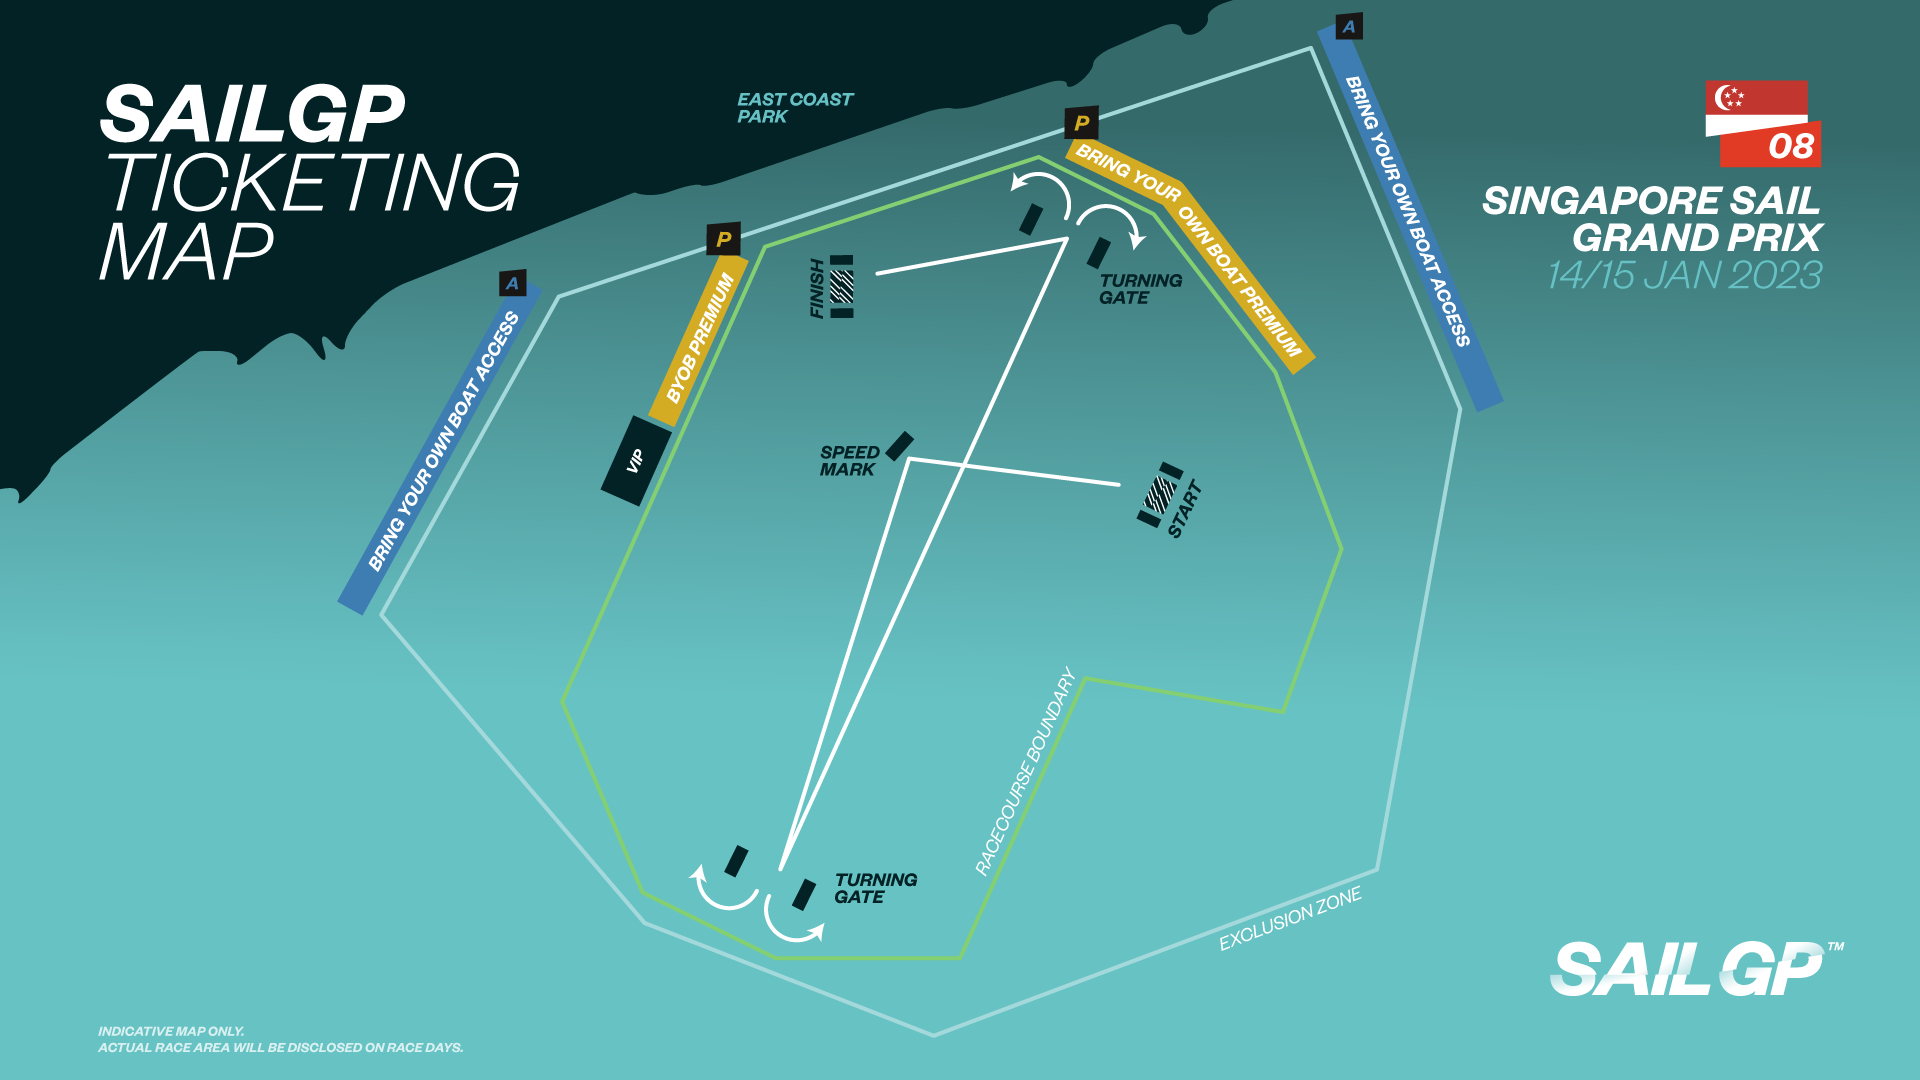 Singapore Sail Grand Prix | Season 3 | Ticketing Map